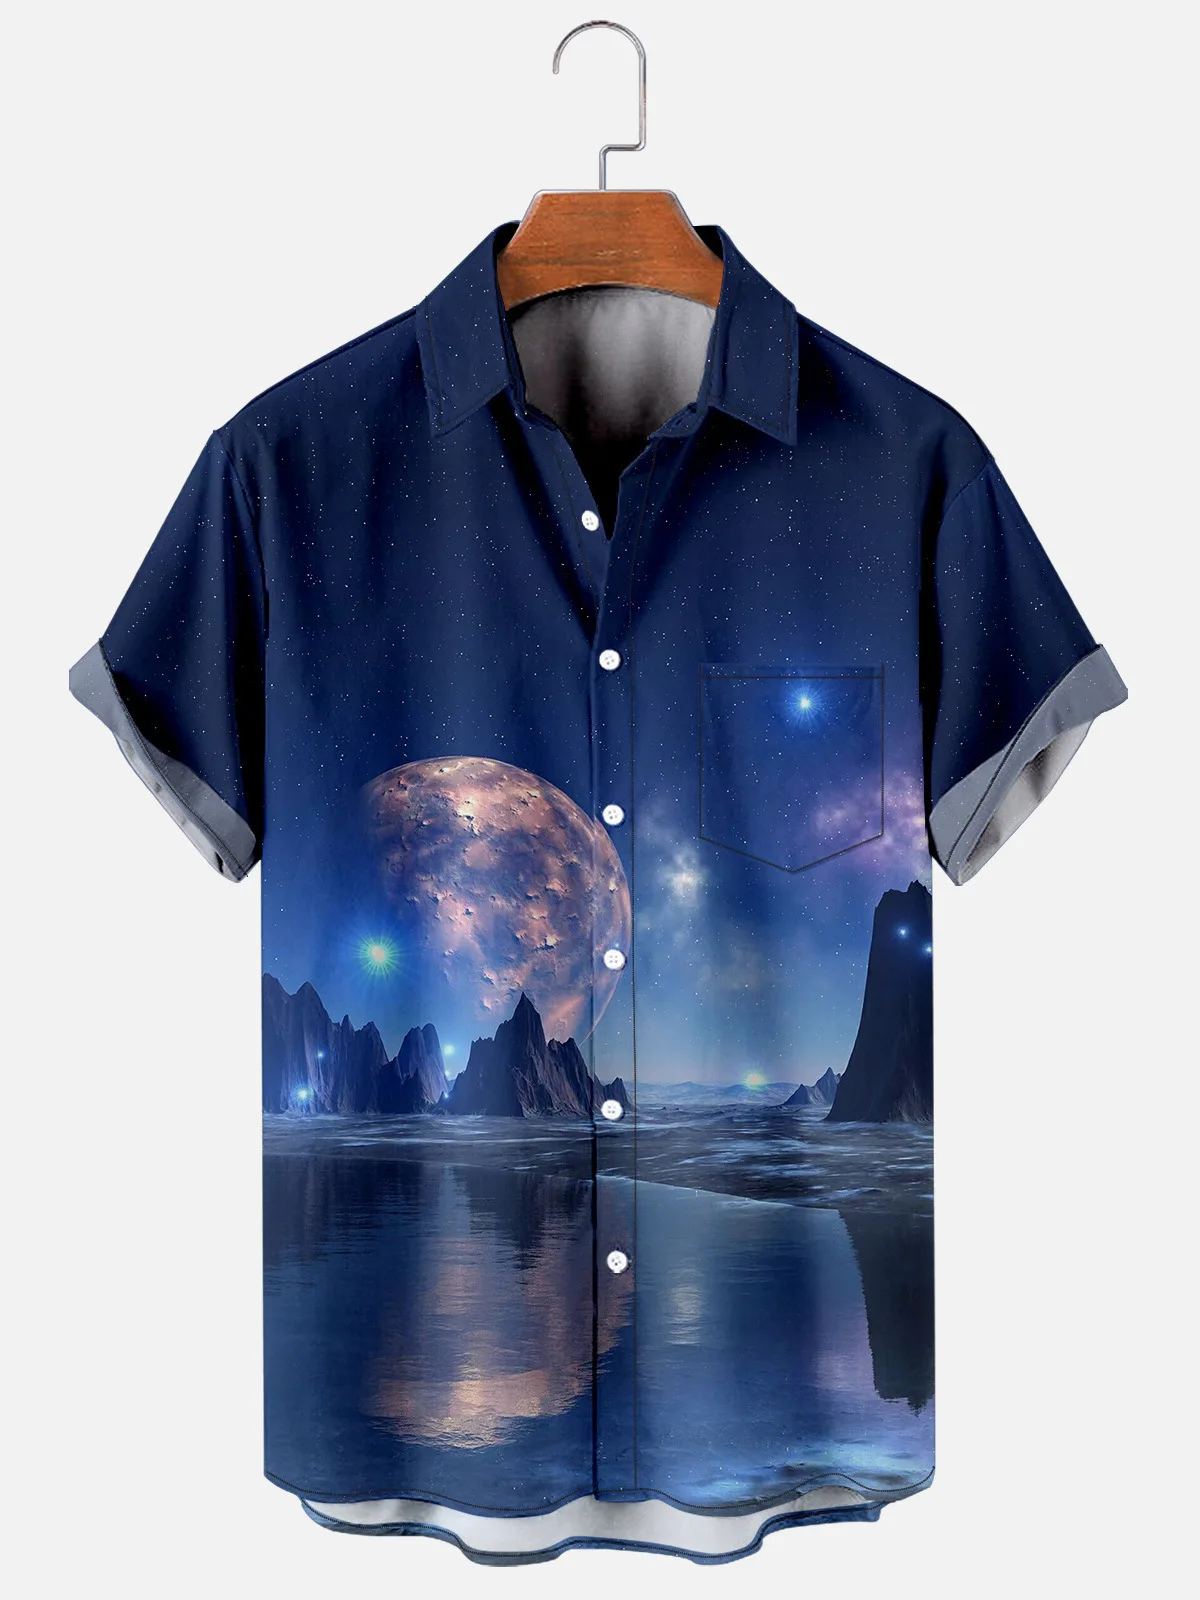 2022 Summer 3D Printing Creative Cross Planet Shirts Men Women Fashion Single Button Shirts Plus Size